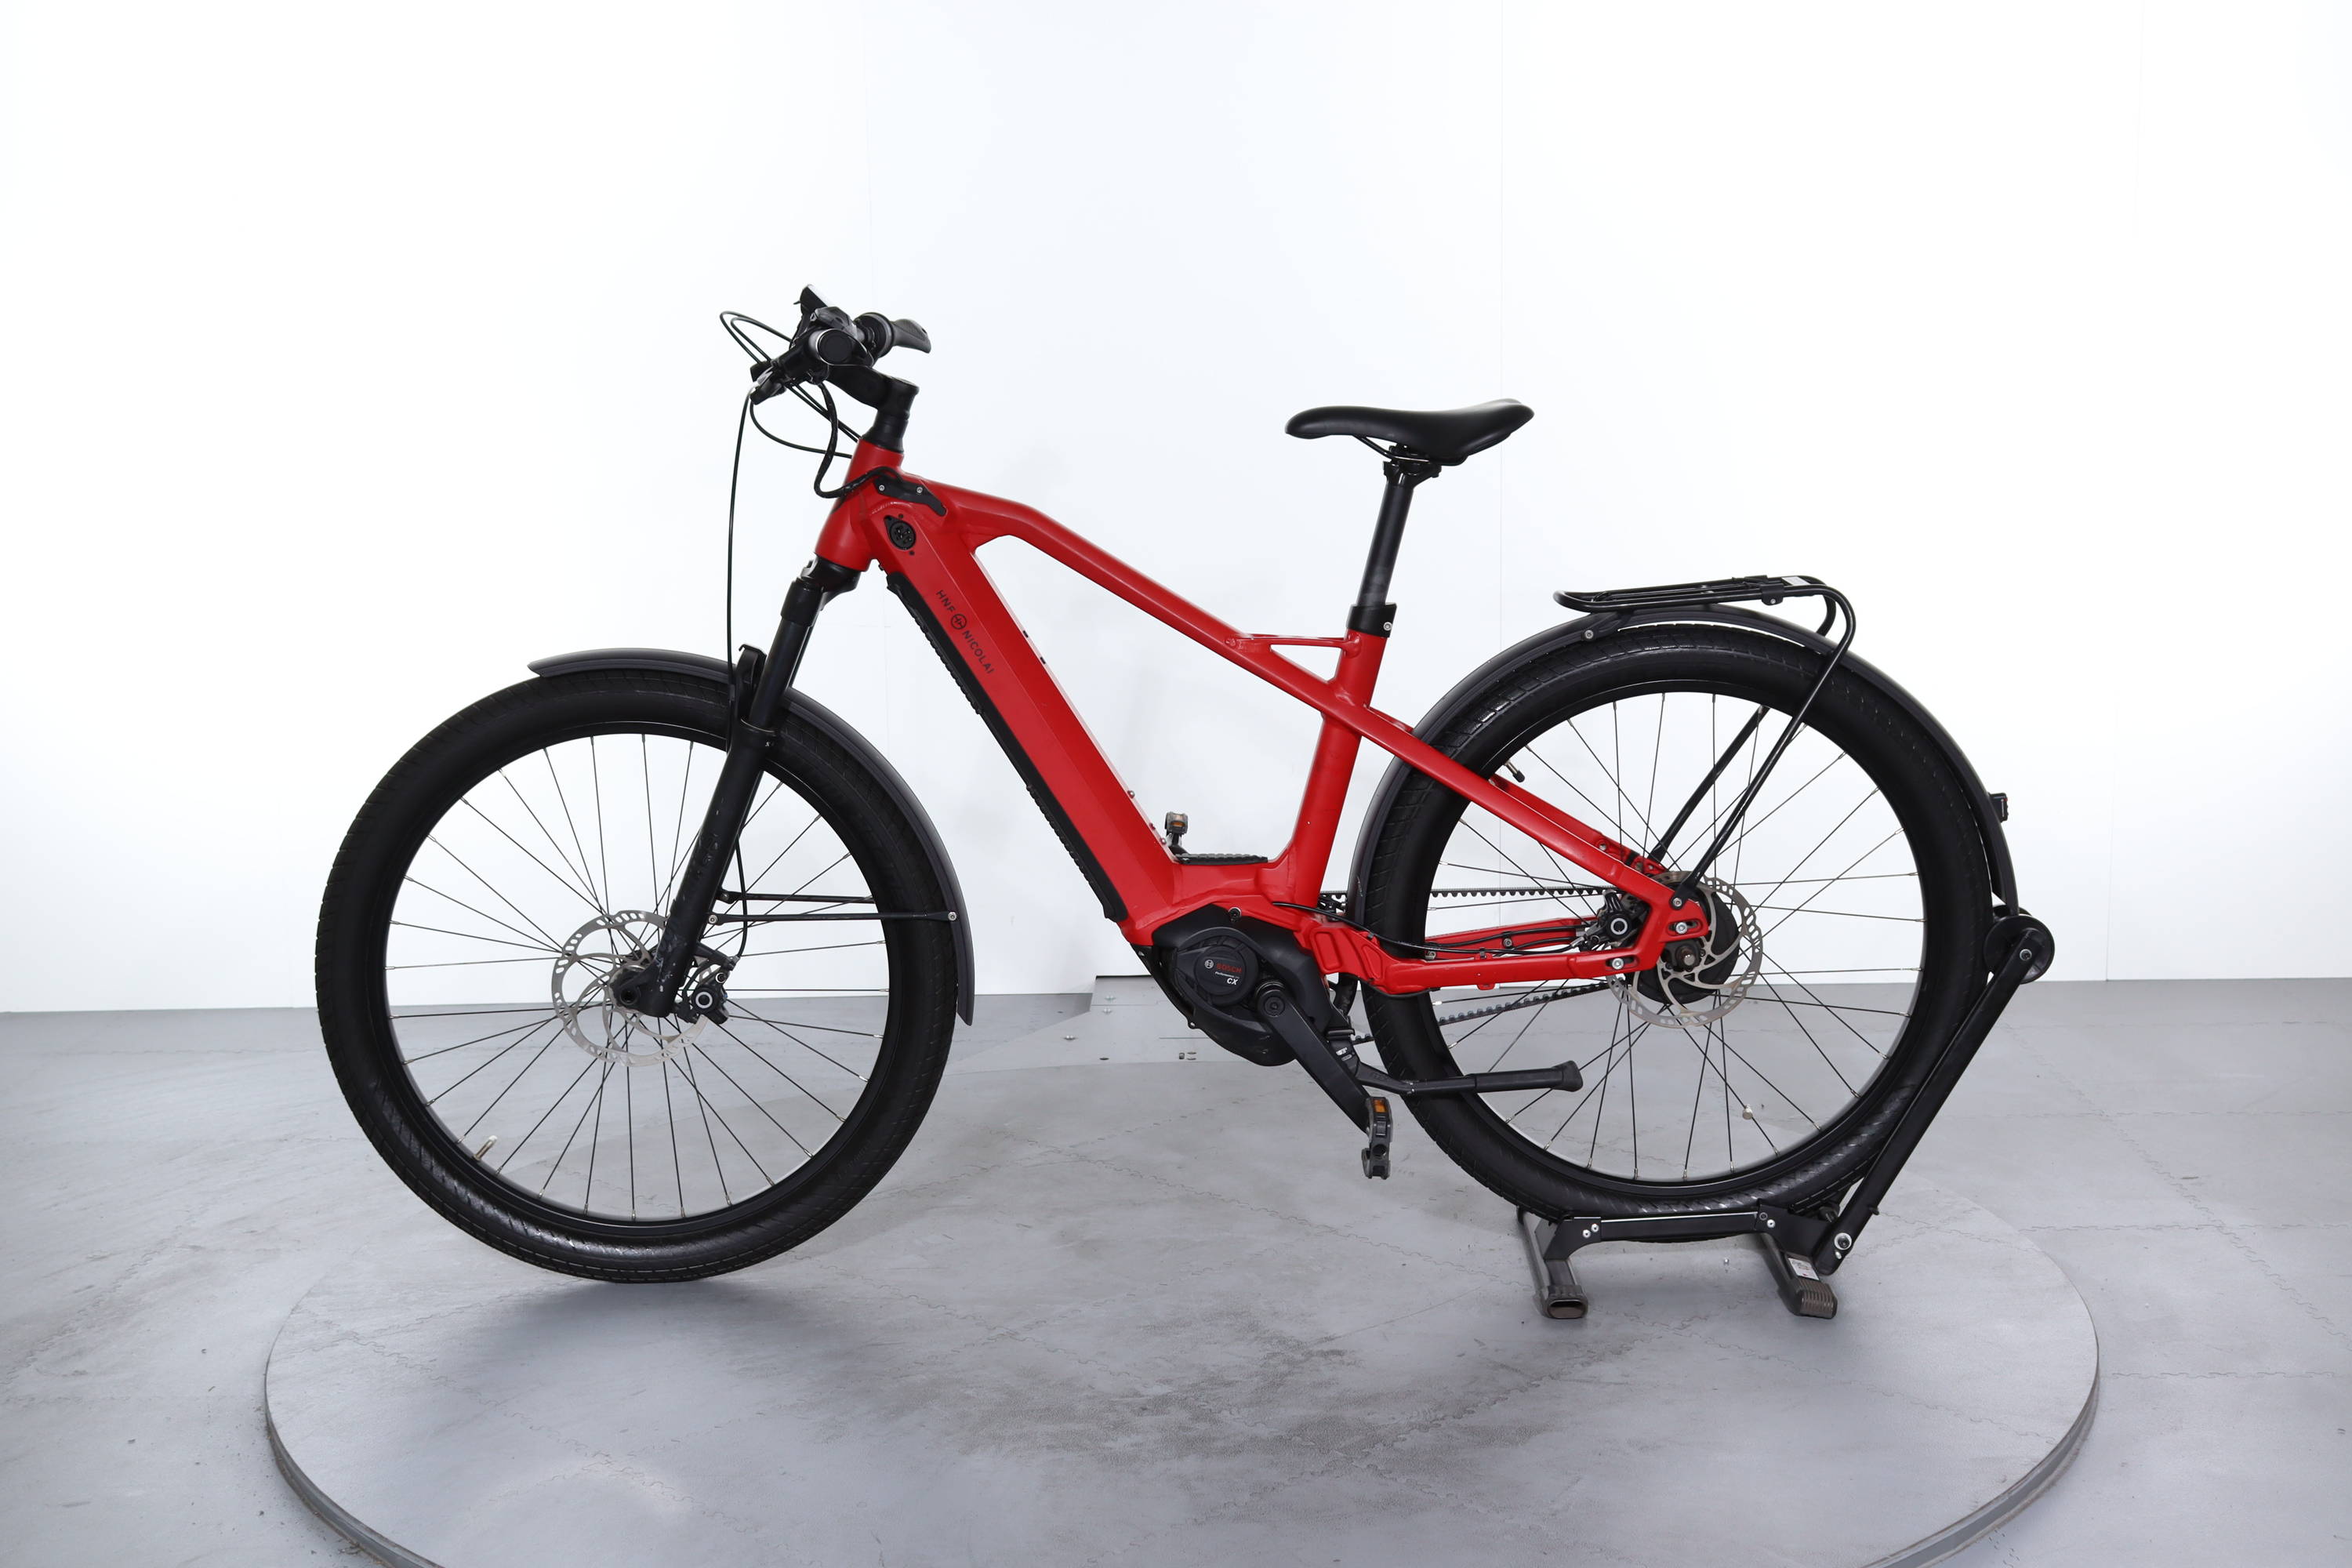 Bosch Performance Line CX motorized electric bike